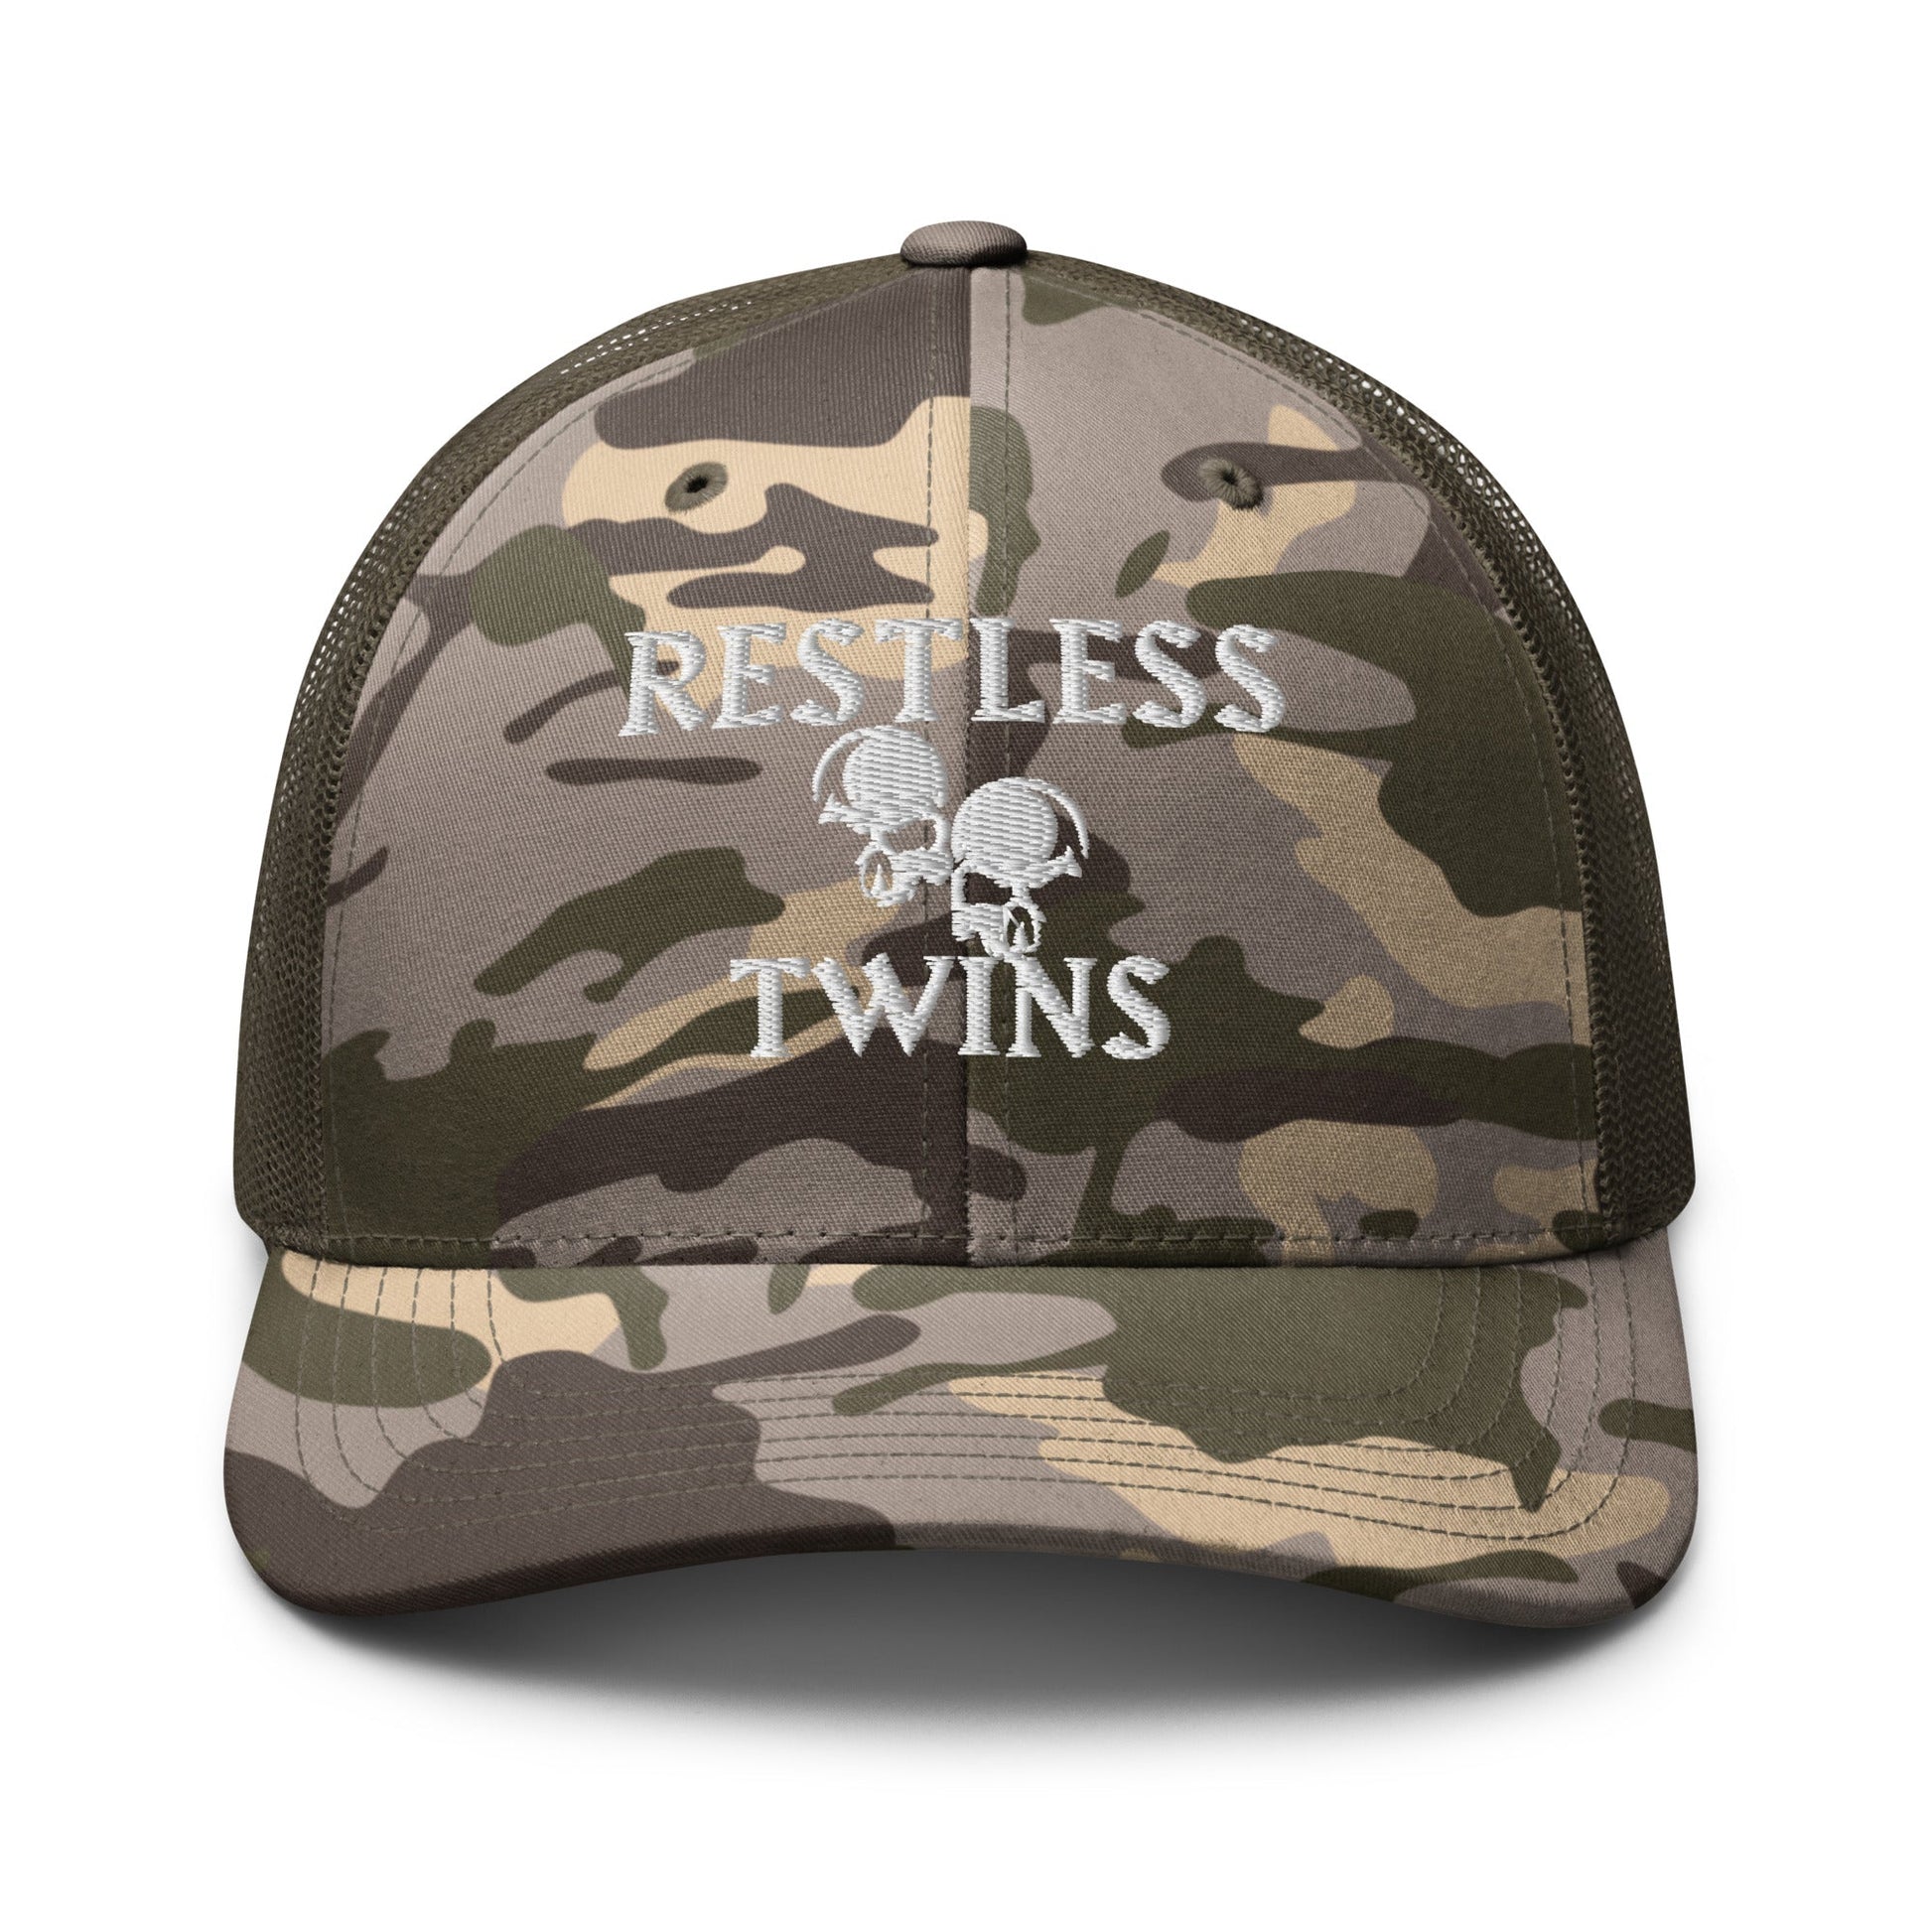 Restless Twins Camouflage Unisex Trucker Hat (White Logo) - Restless Twins Apparel Co.